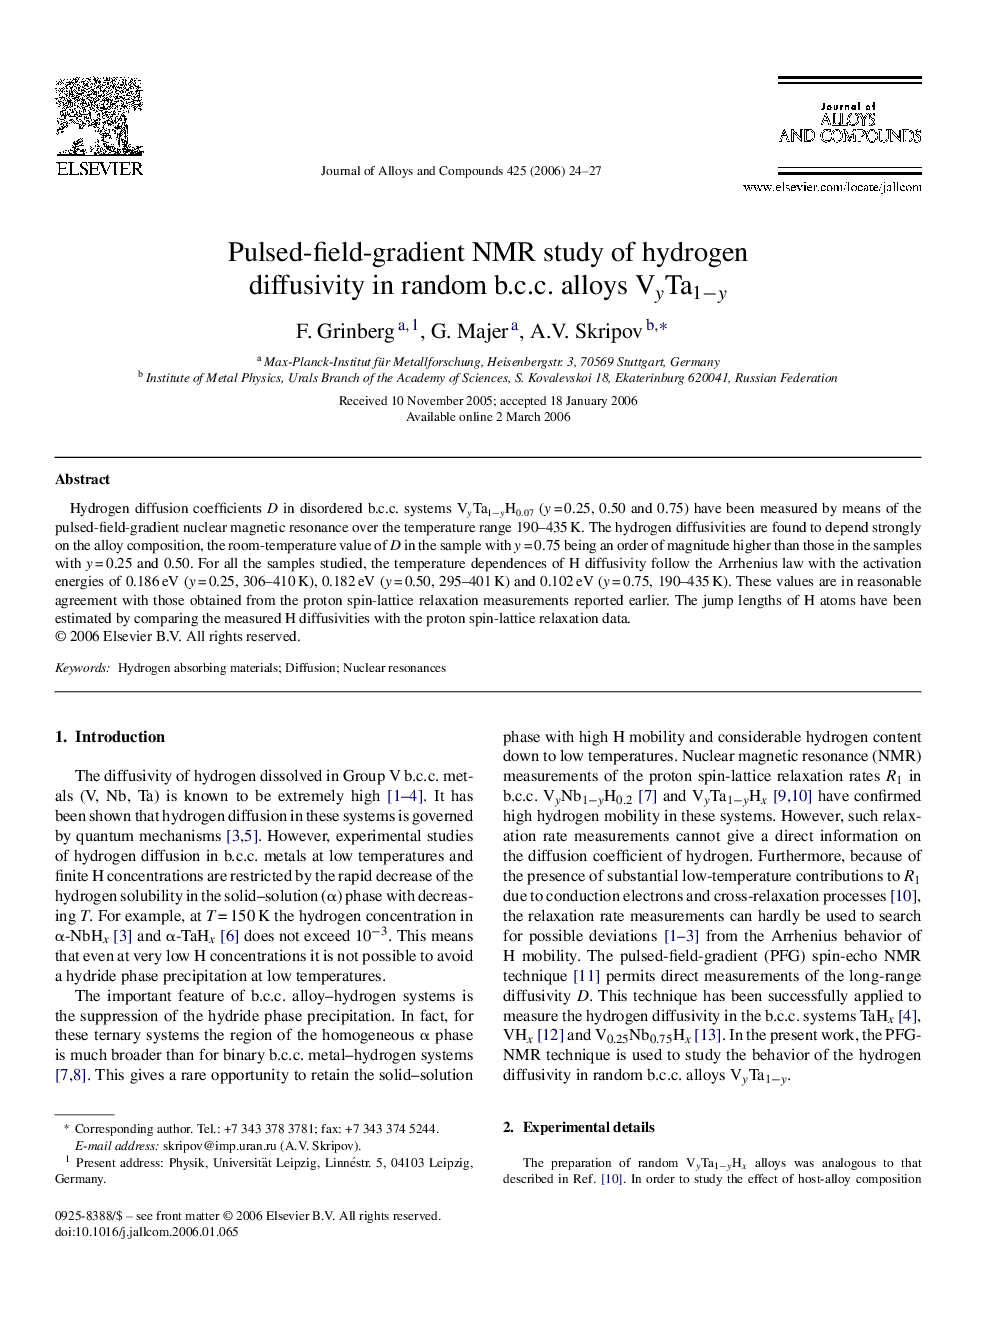 Pulsed-field-gradient NMR study of hydrogen diffusivity in random b.c.c. alloys VyTa1ây